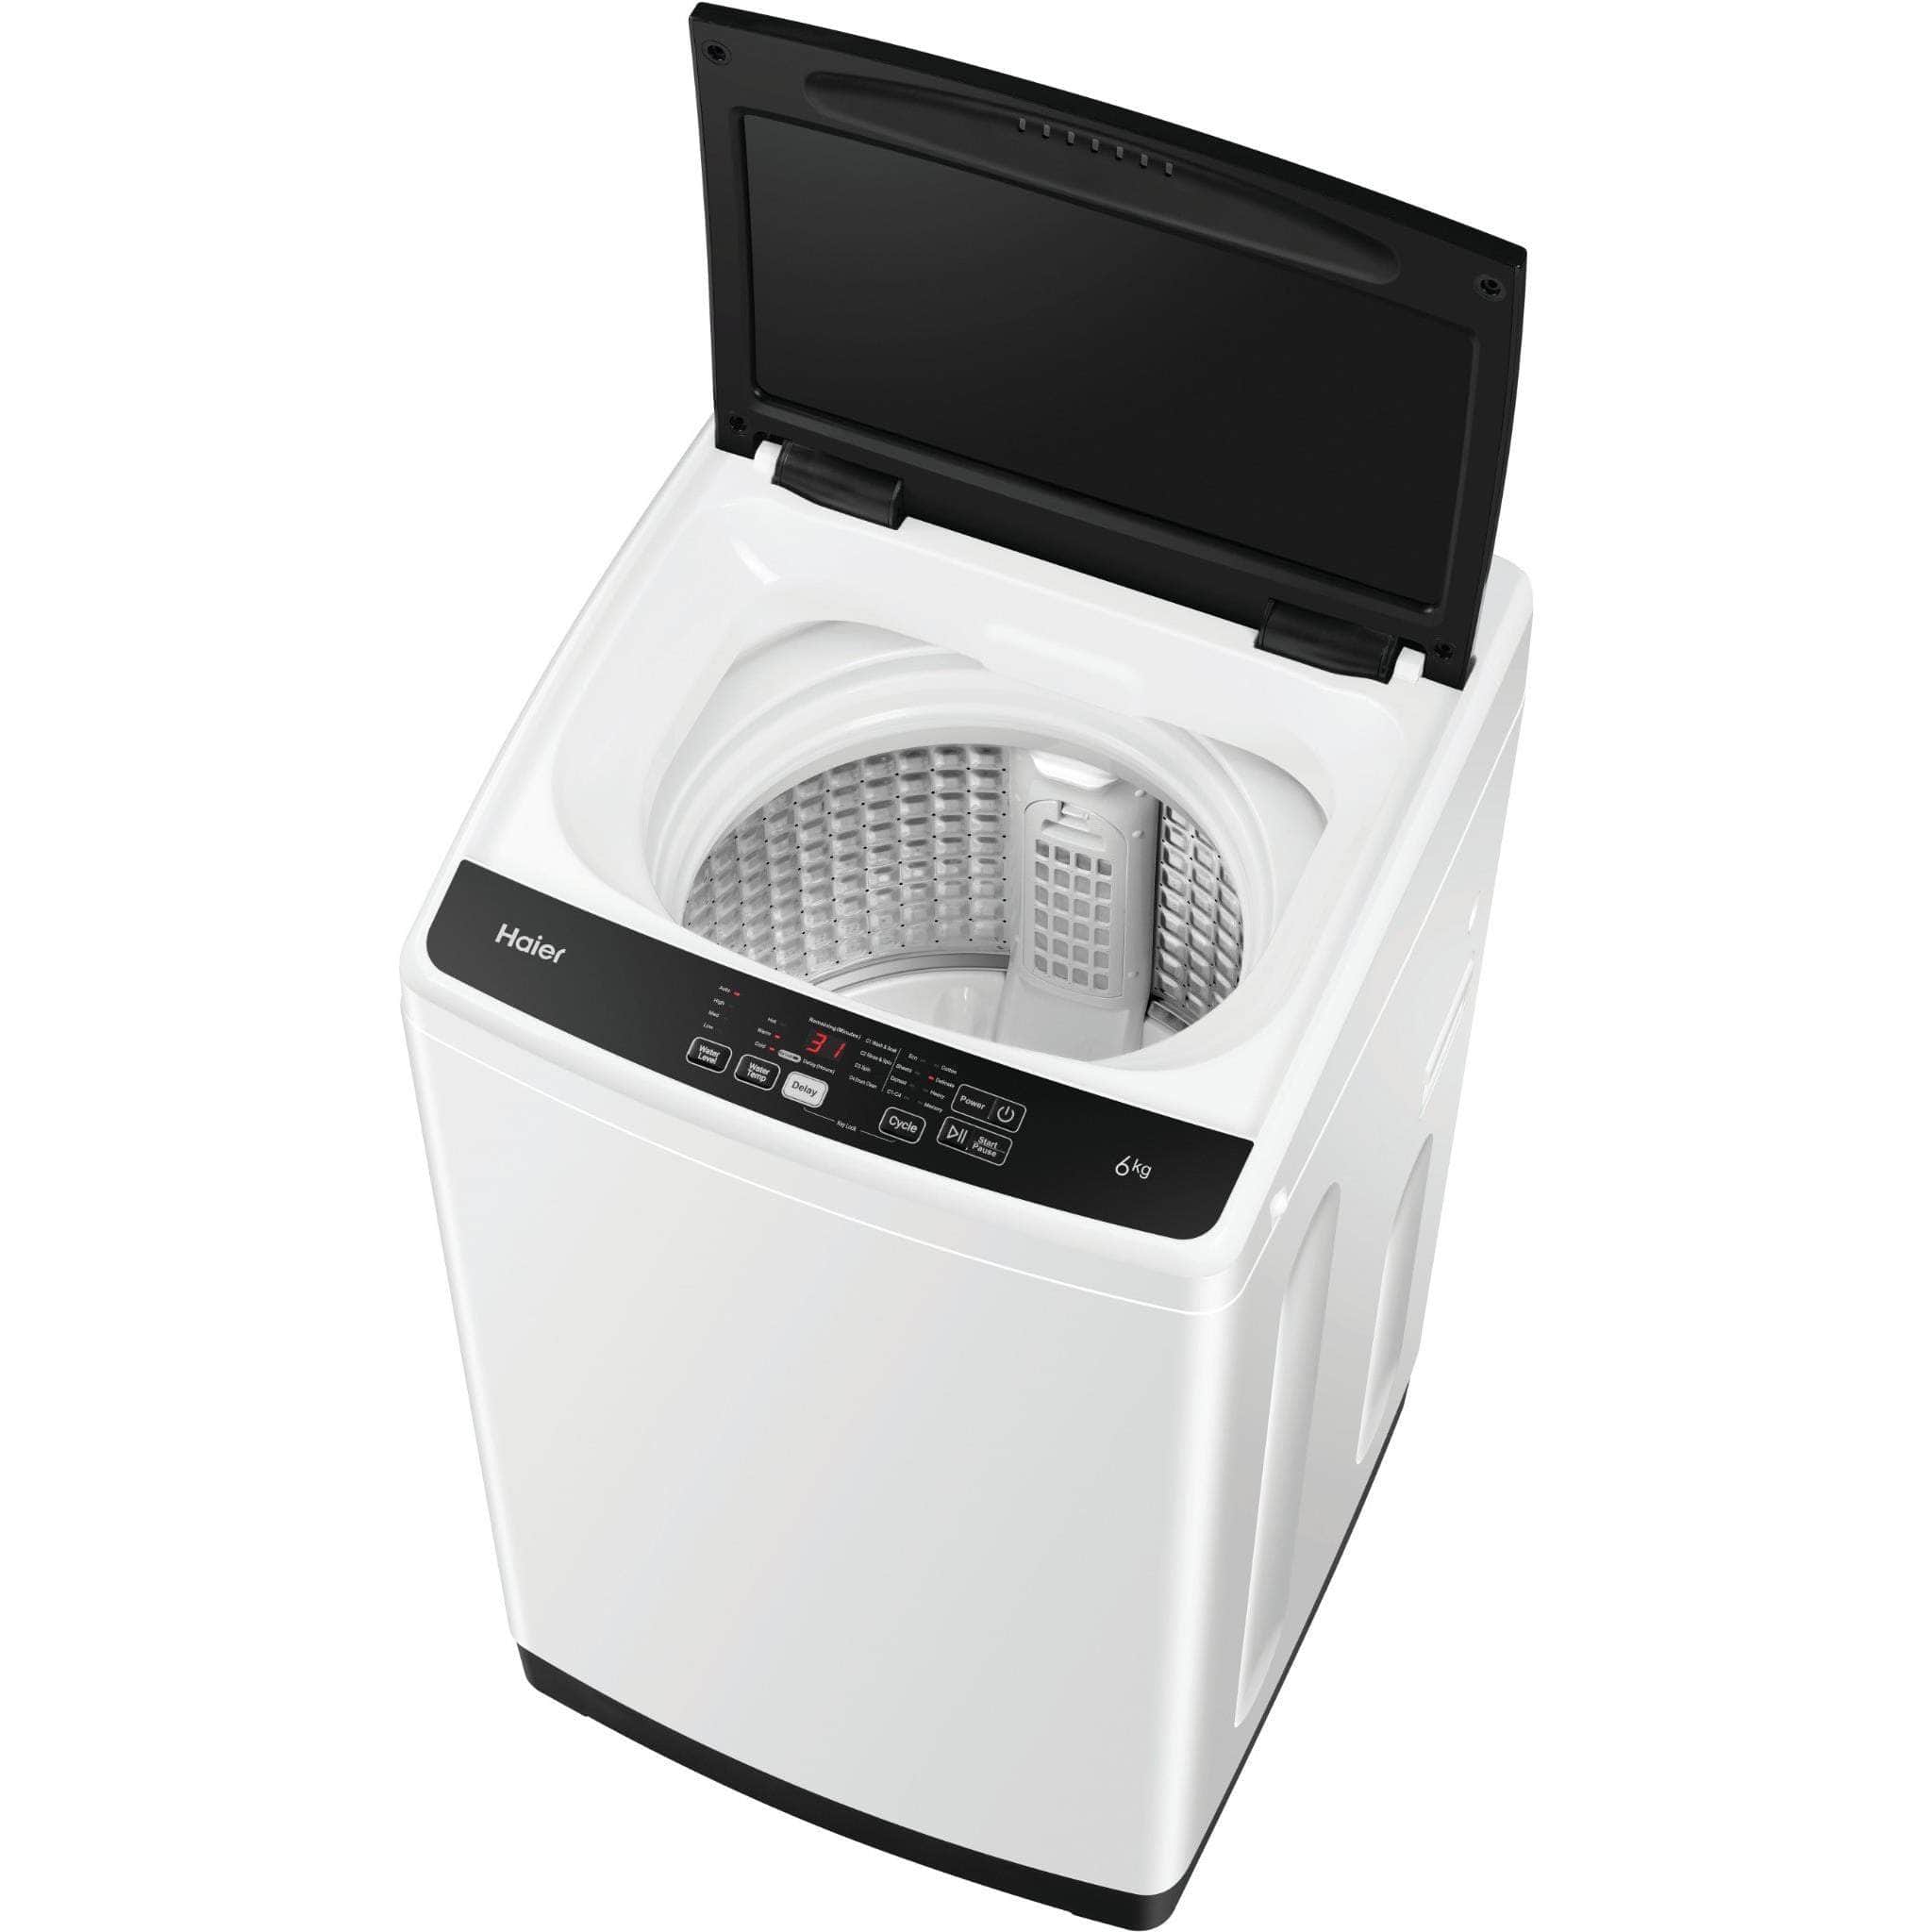 Haier 6kg Top Load Washing Machine